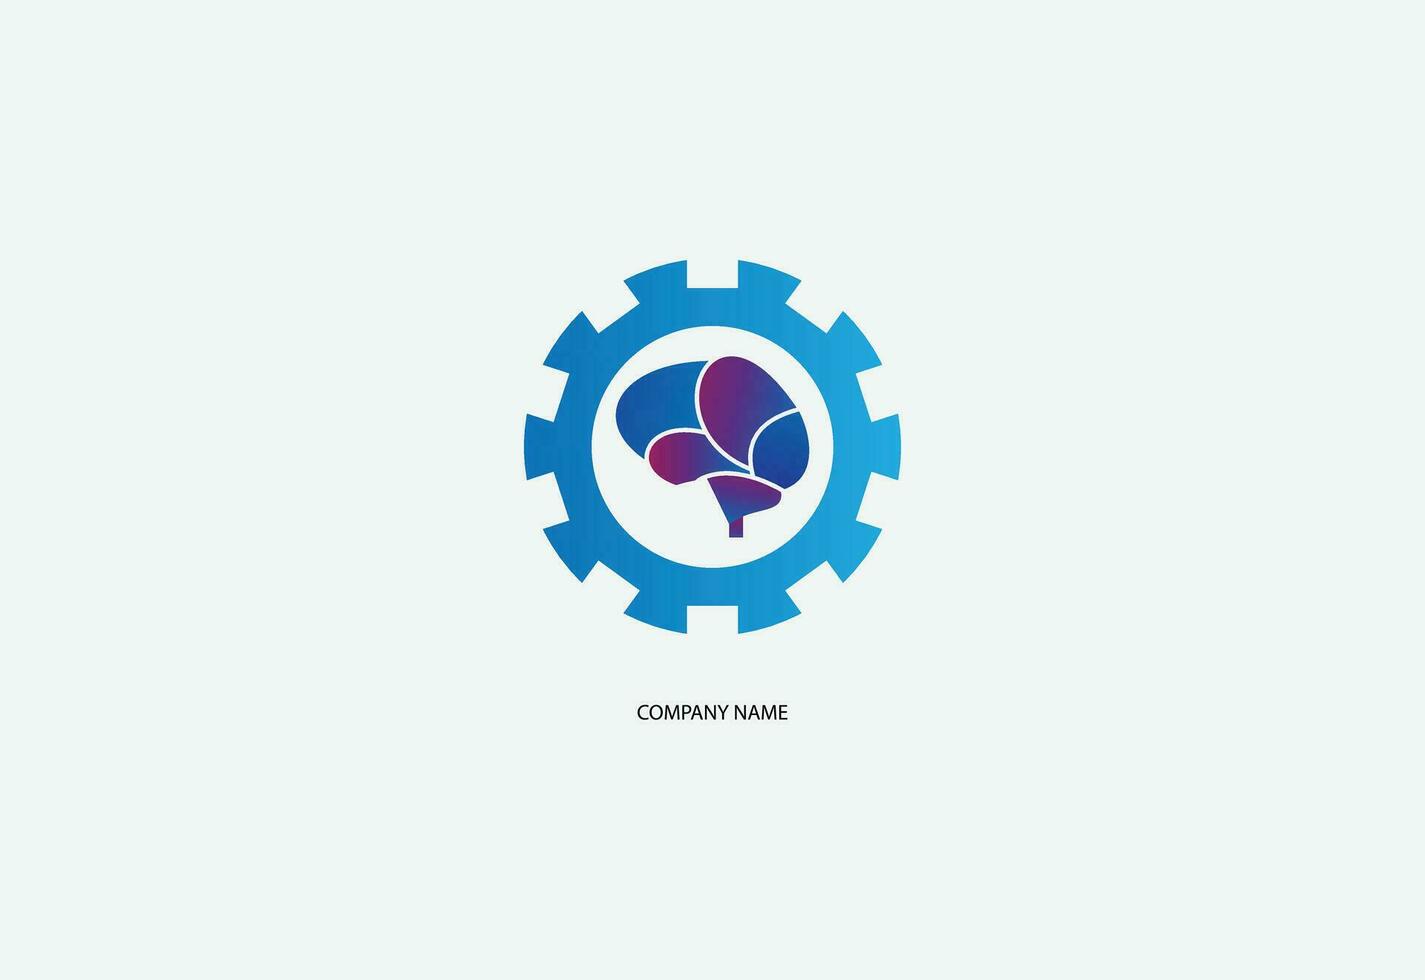 testa umano inteligente tecnologia logo vettore, cervello umano artificiale logo vettore